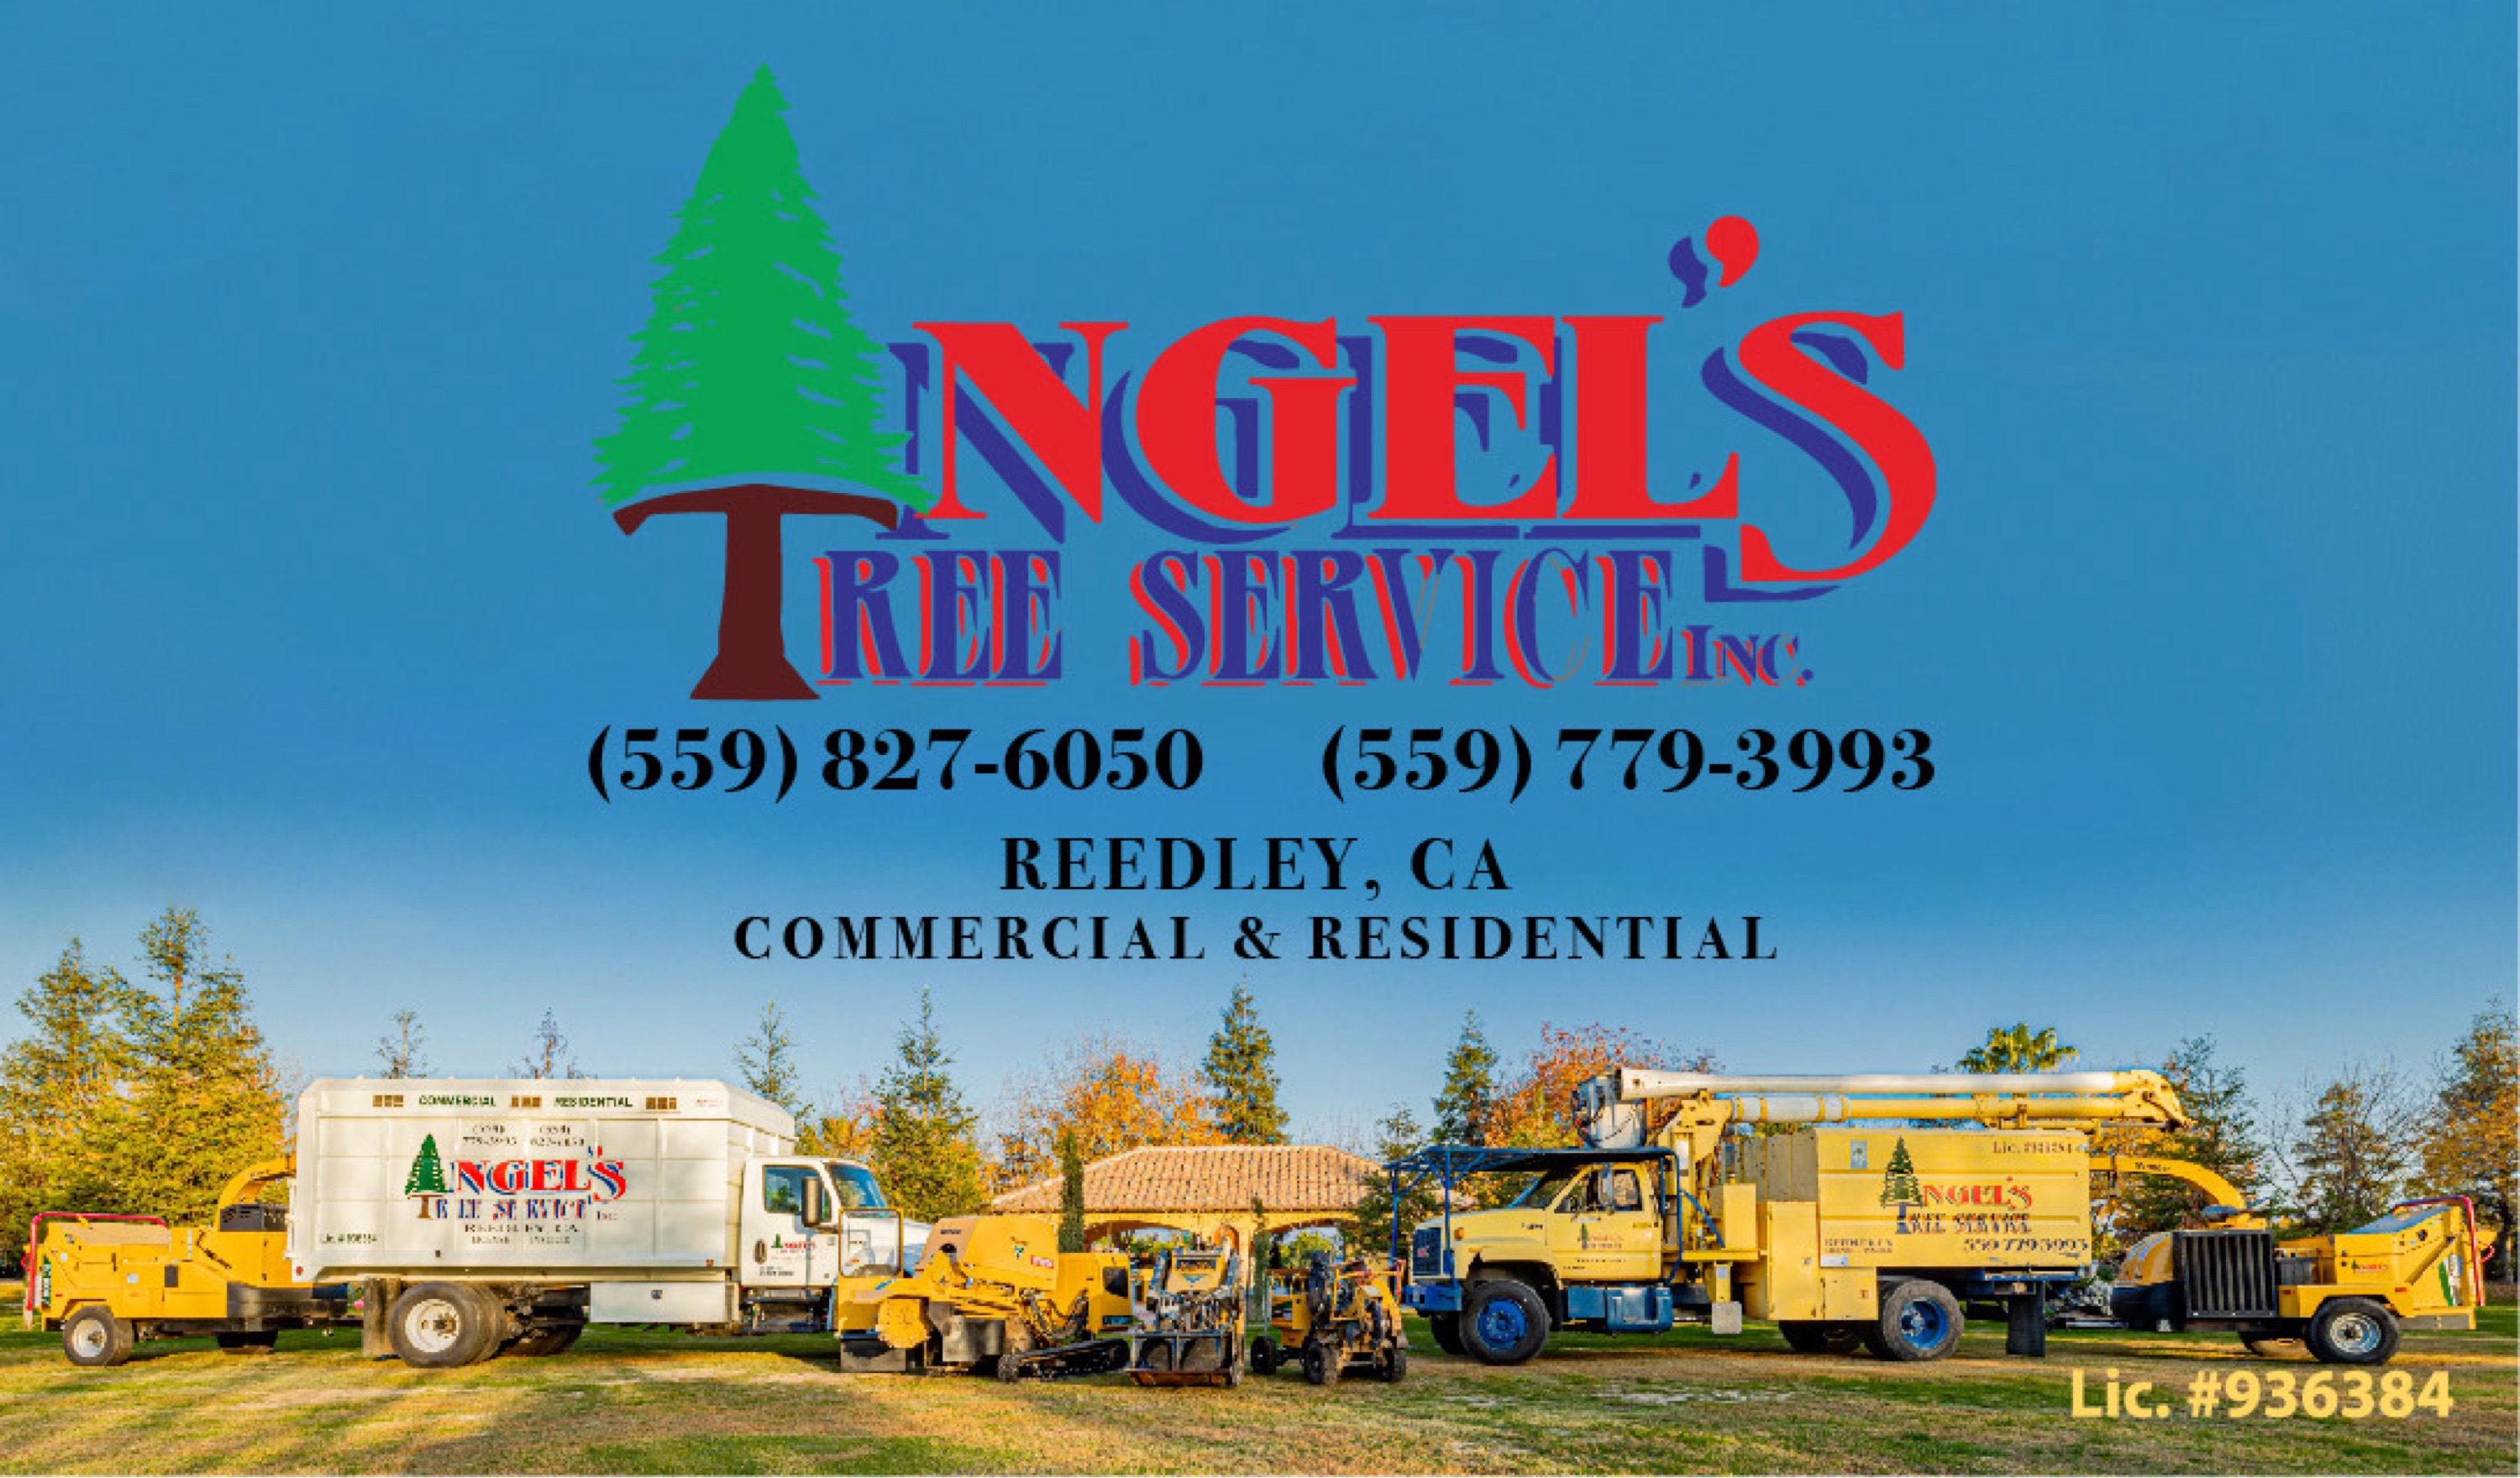 Angels Tree Service Inc. Logo